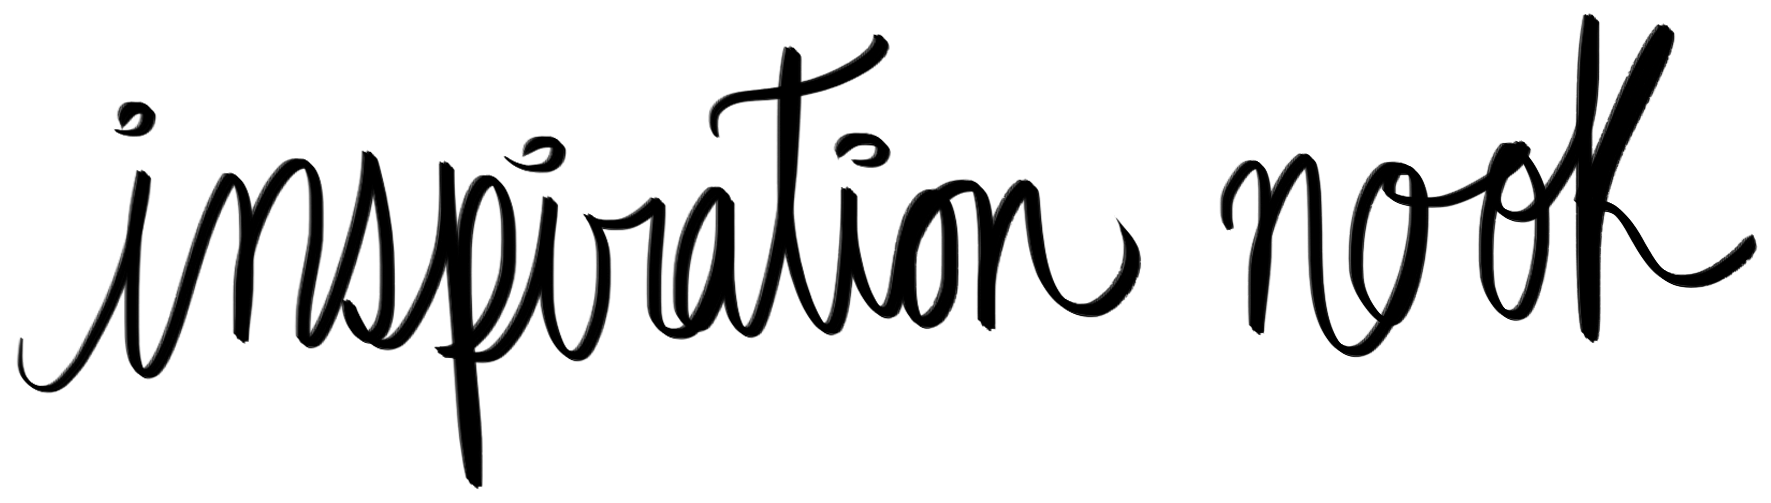 inspiration nook logo